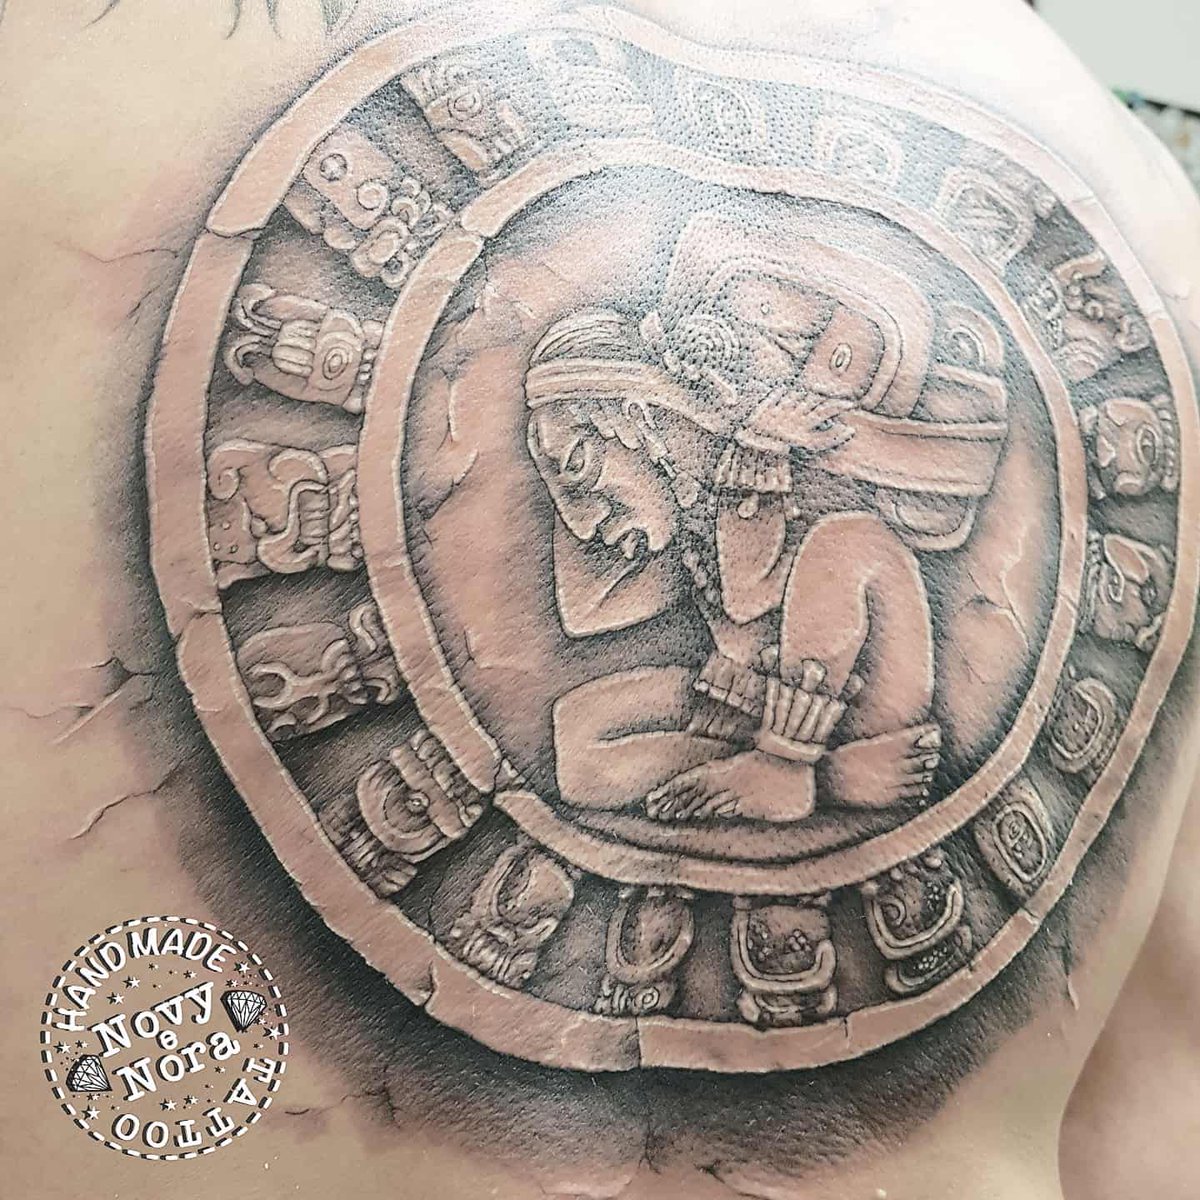 Novytattoo Handmade On Twitter The Mayan Calendar Maya Mayantattoo Mayancalendar Calendariomaya Tattoo Handmadetattoostudio Carpi Tattooedmen Inkedman Art Intherock Graven Scolpito Ink Https T Co Pgwkfmruyv